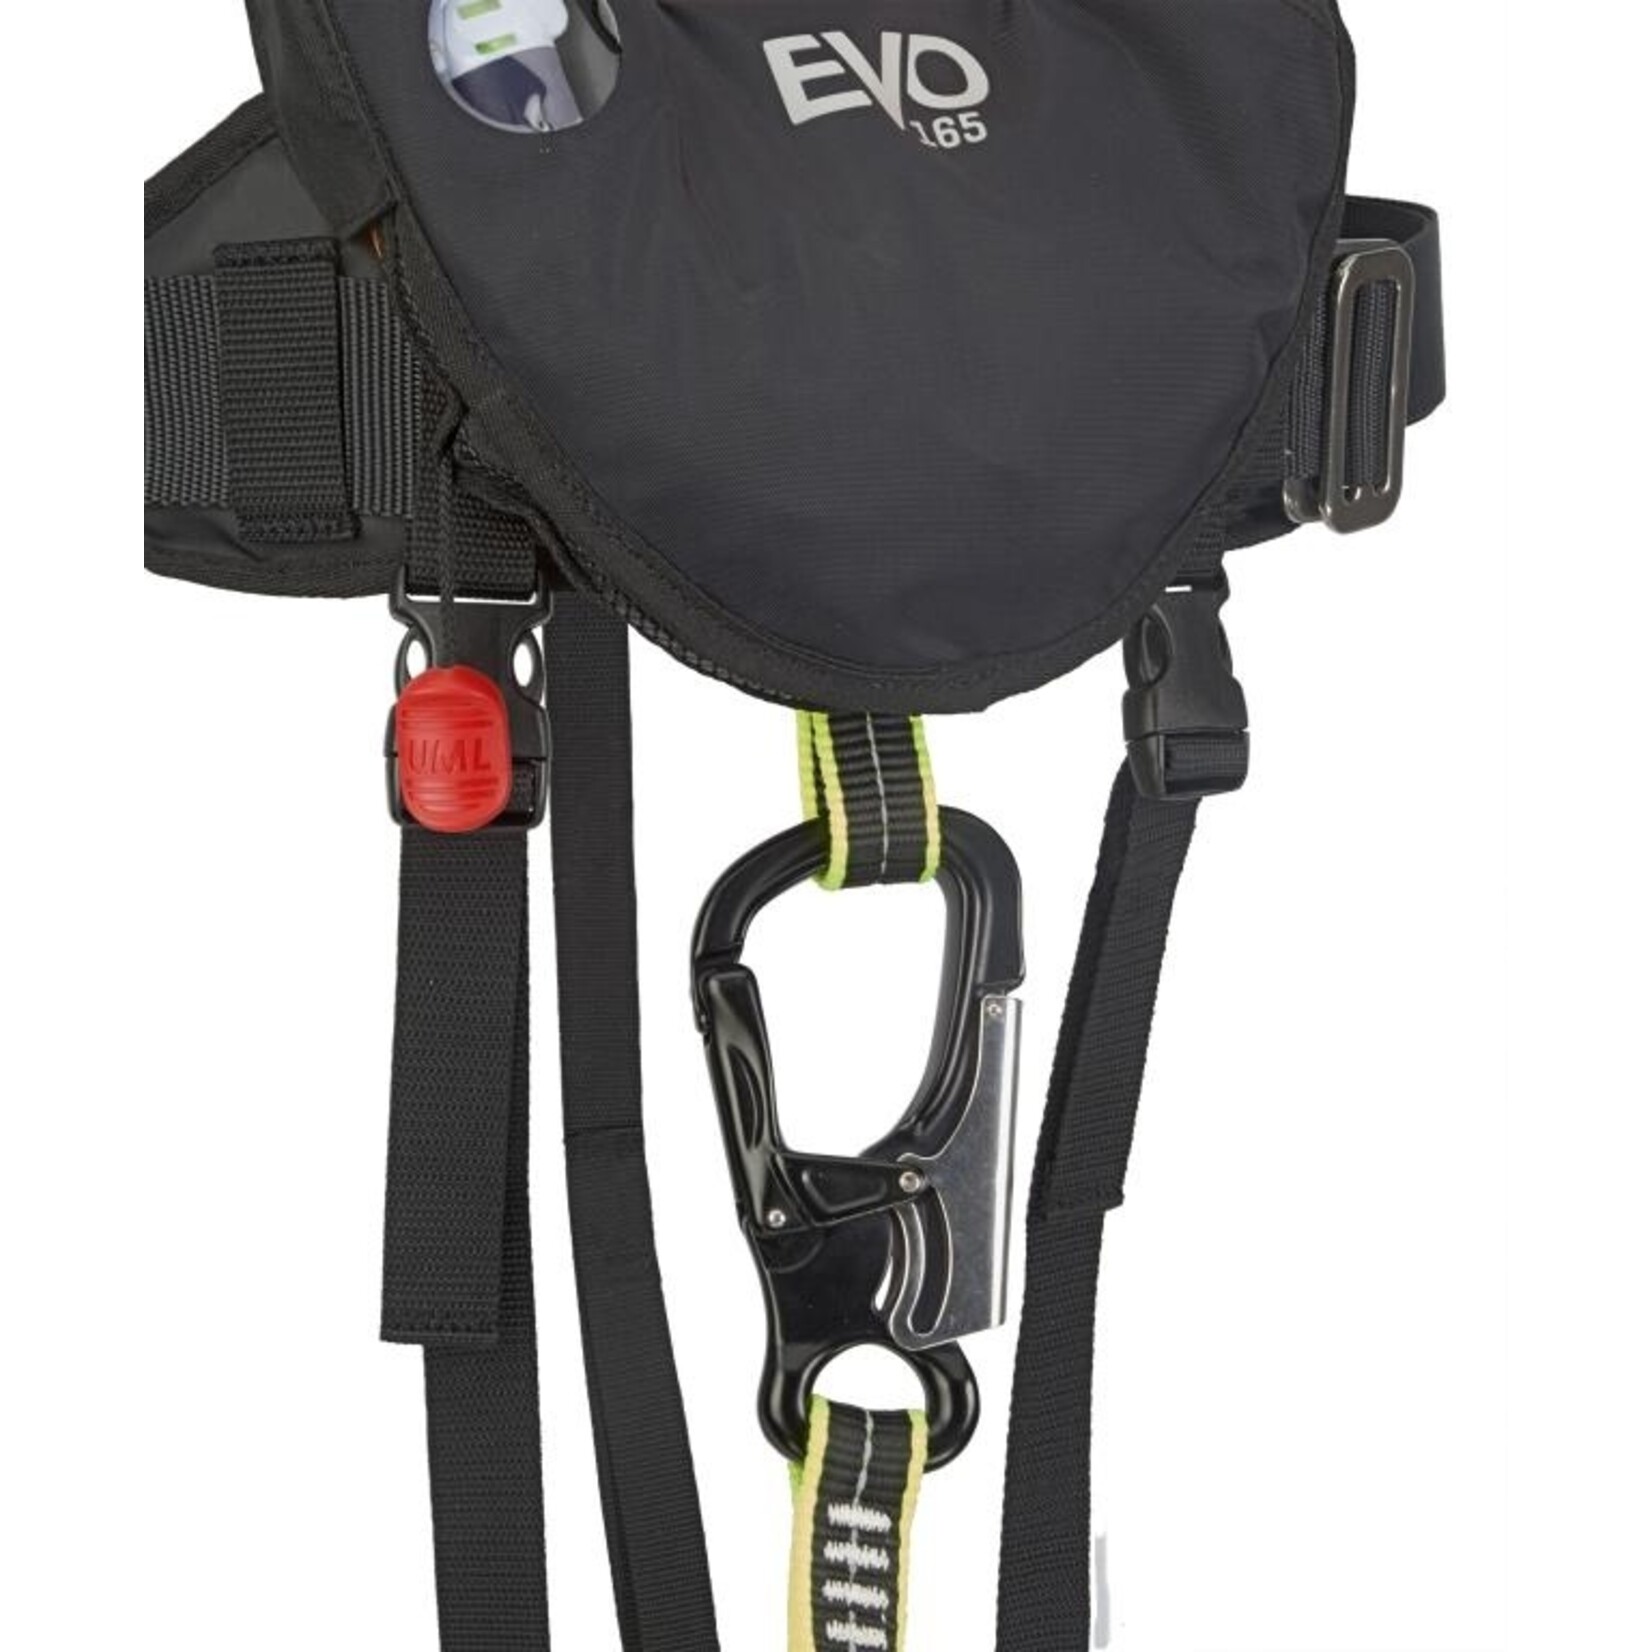 Plastimo Evo 165 ii auto ps black with harness.